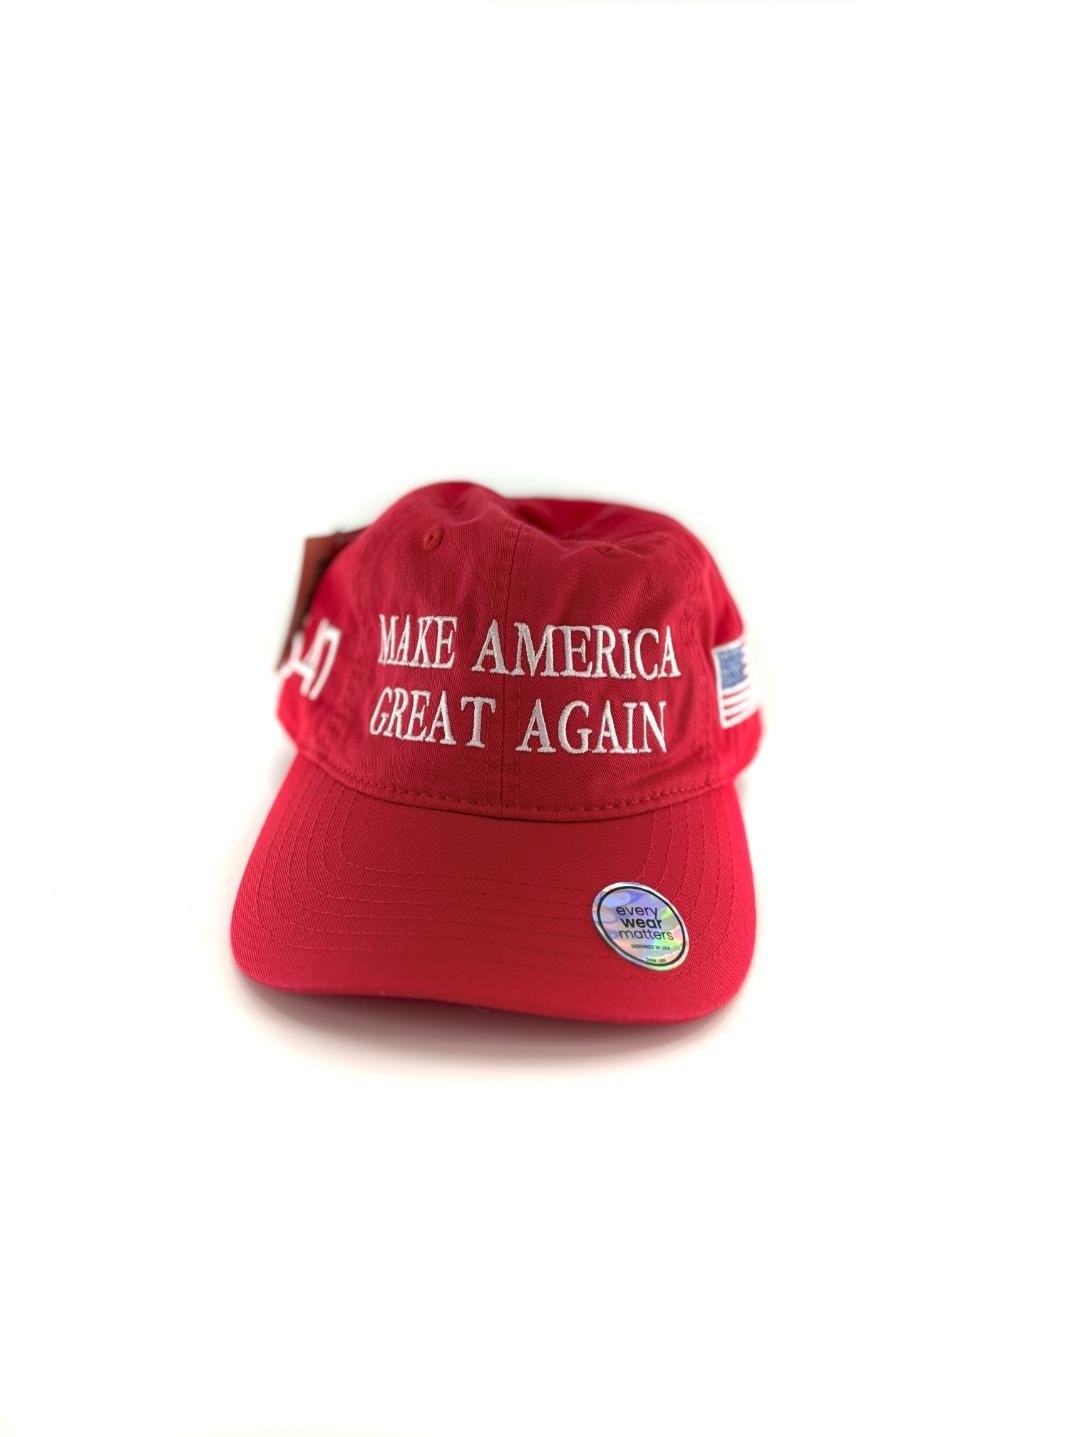 Make America Great Again Red HAT